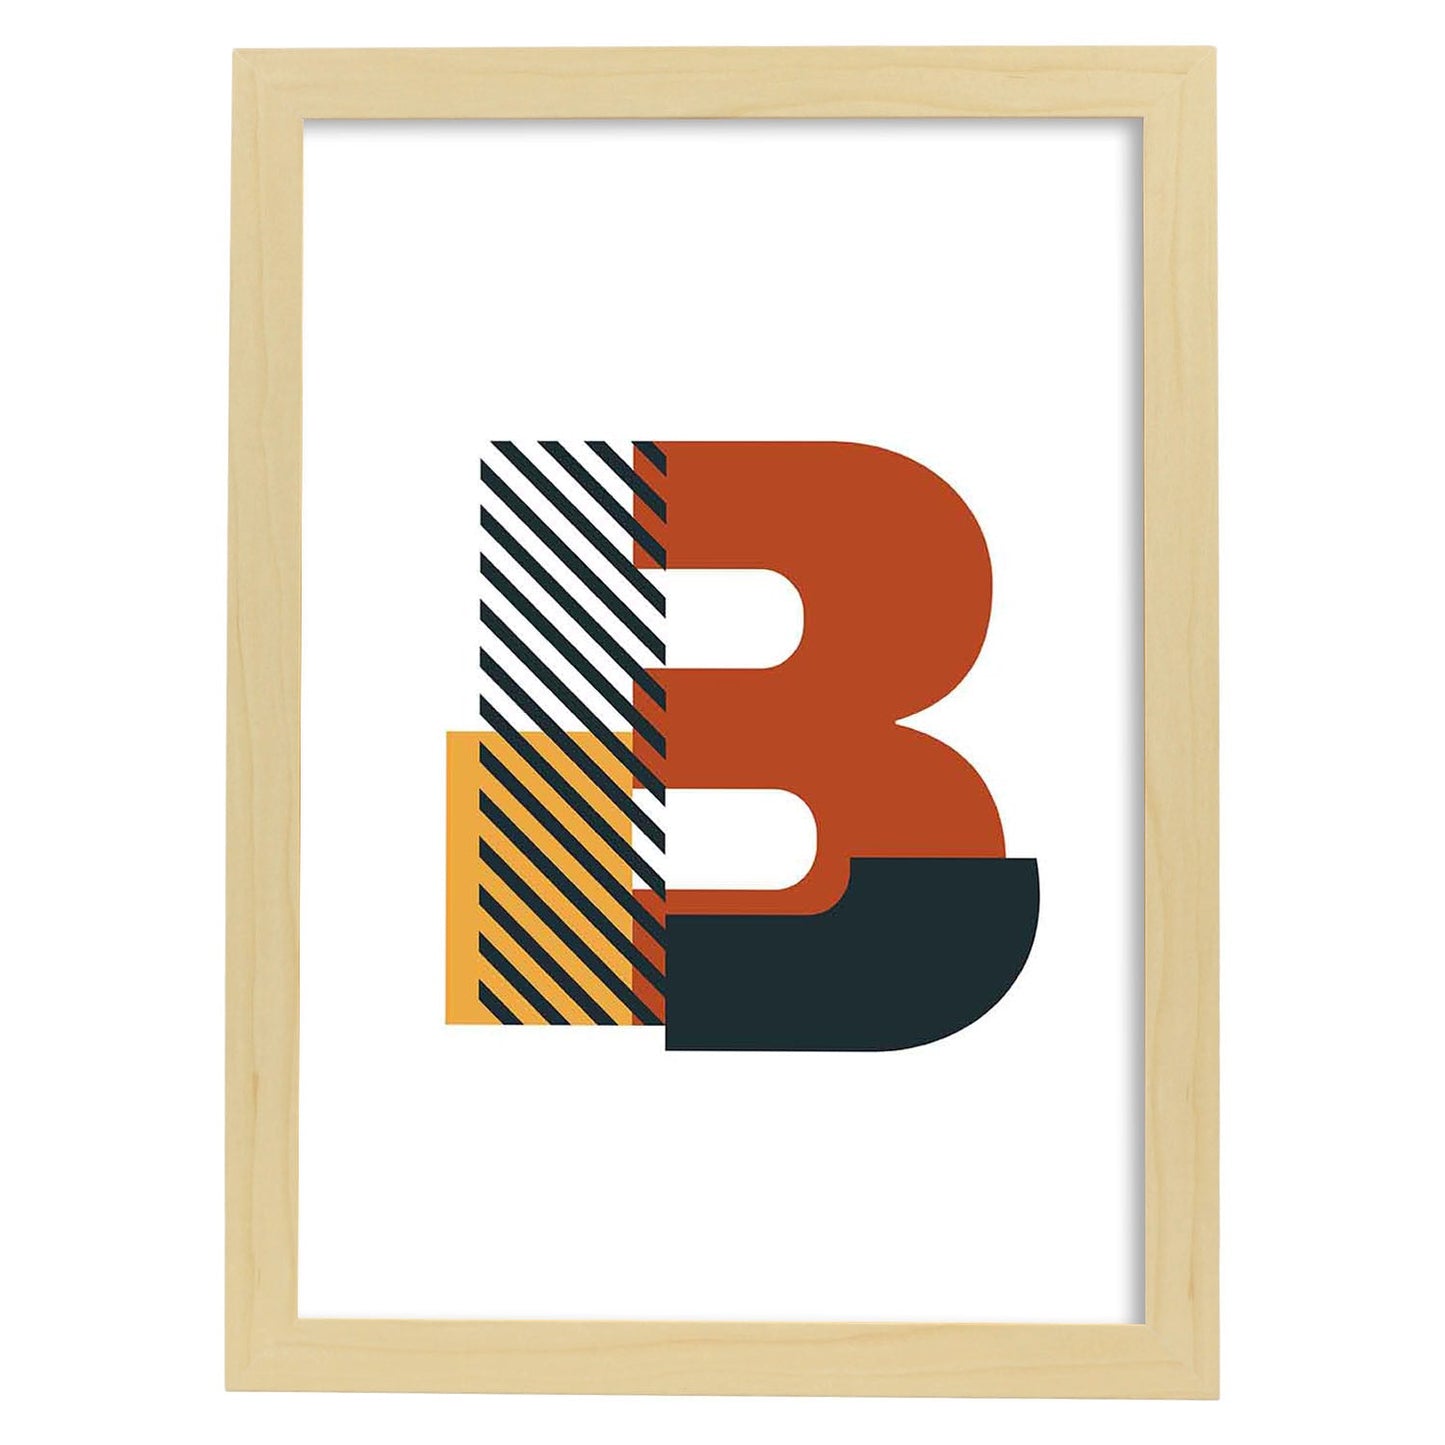 Poster de letra B. Lámina estilo Geometria con imágenes del alfabeto.-Artwork-Nacnic-A4-Marco Madera clara-Nacnic Estudio SL